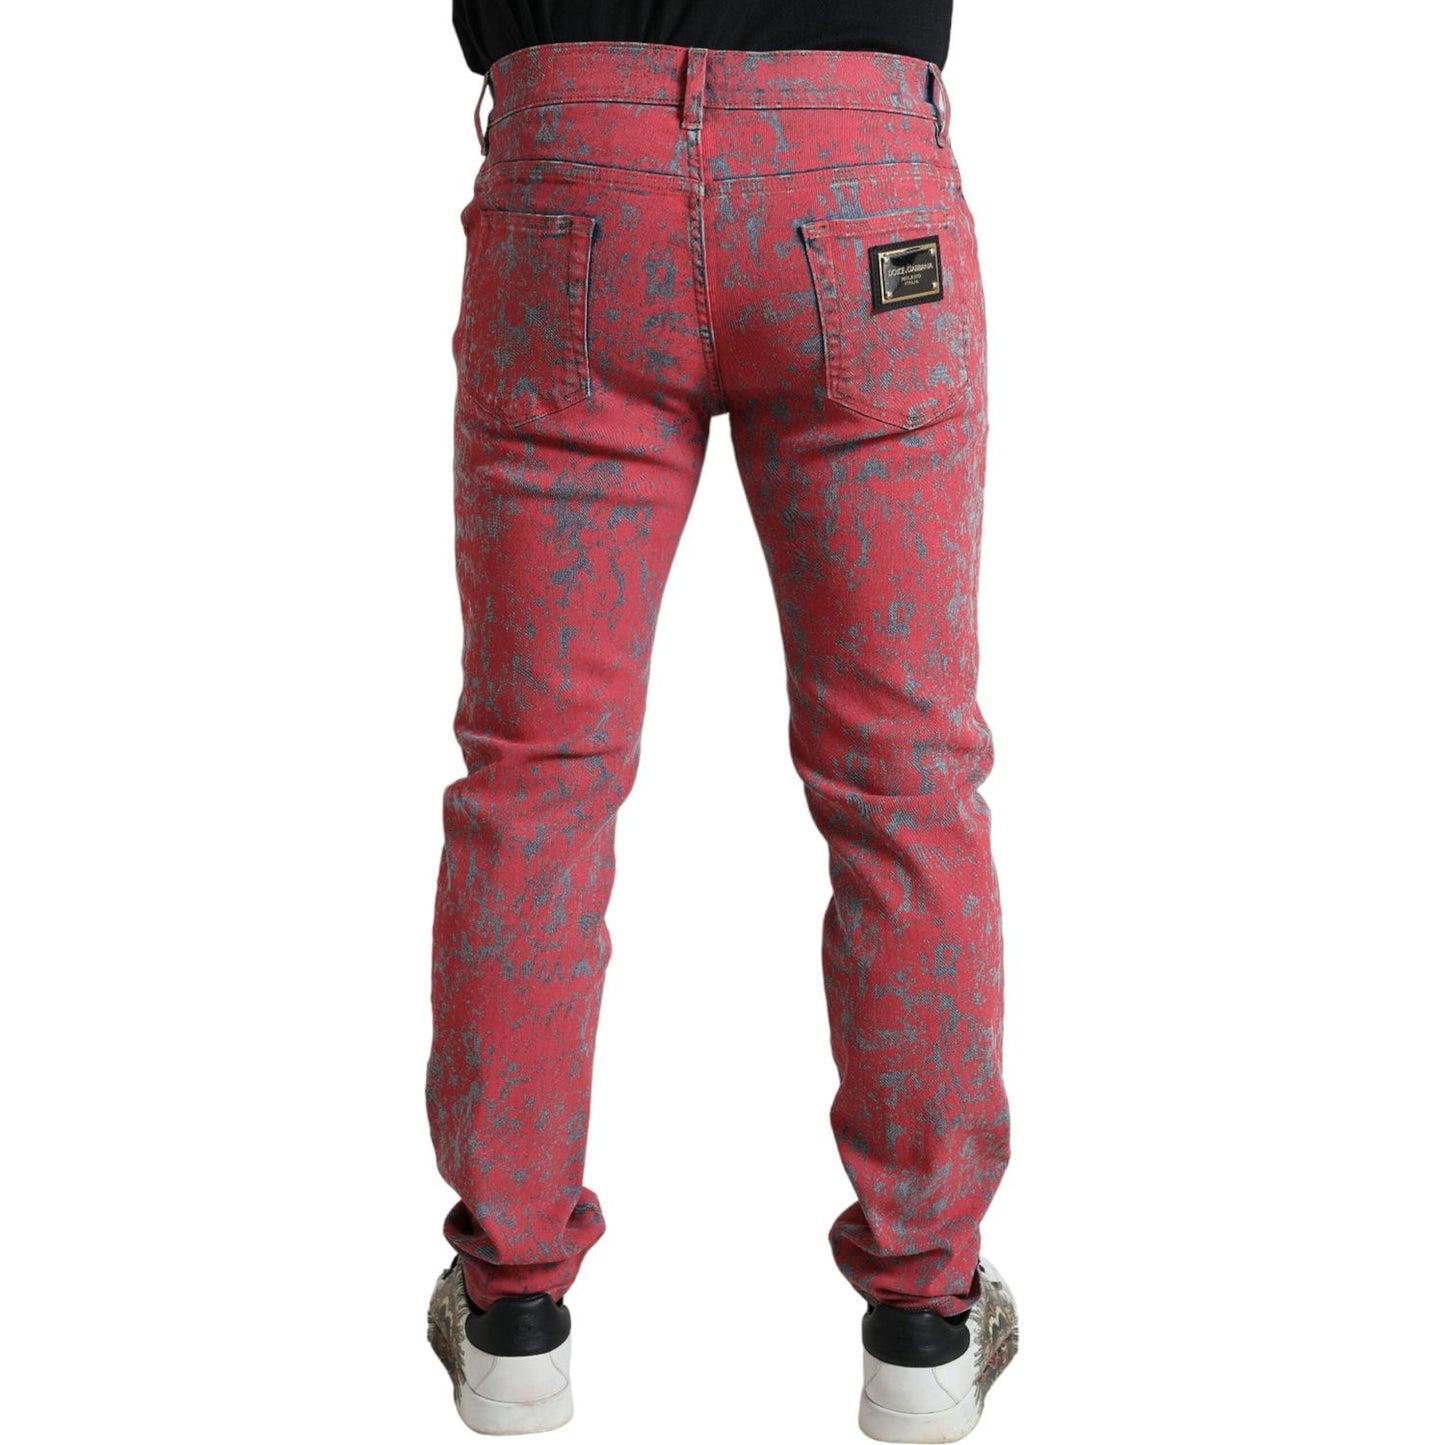 Dolce & Gabbana Red Tie Dye Skinny Denim Jeans red-cotton-dye-slim-fit-men-denim-jeans 465A8179-BG-scaled-86b54a05-c69.jpg